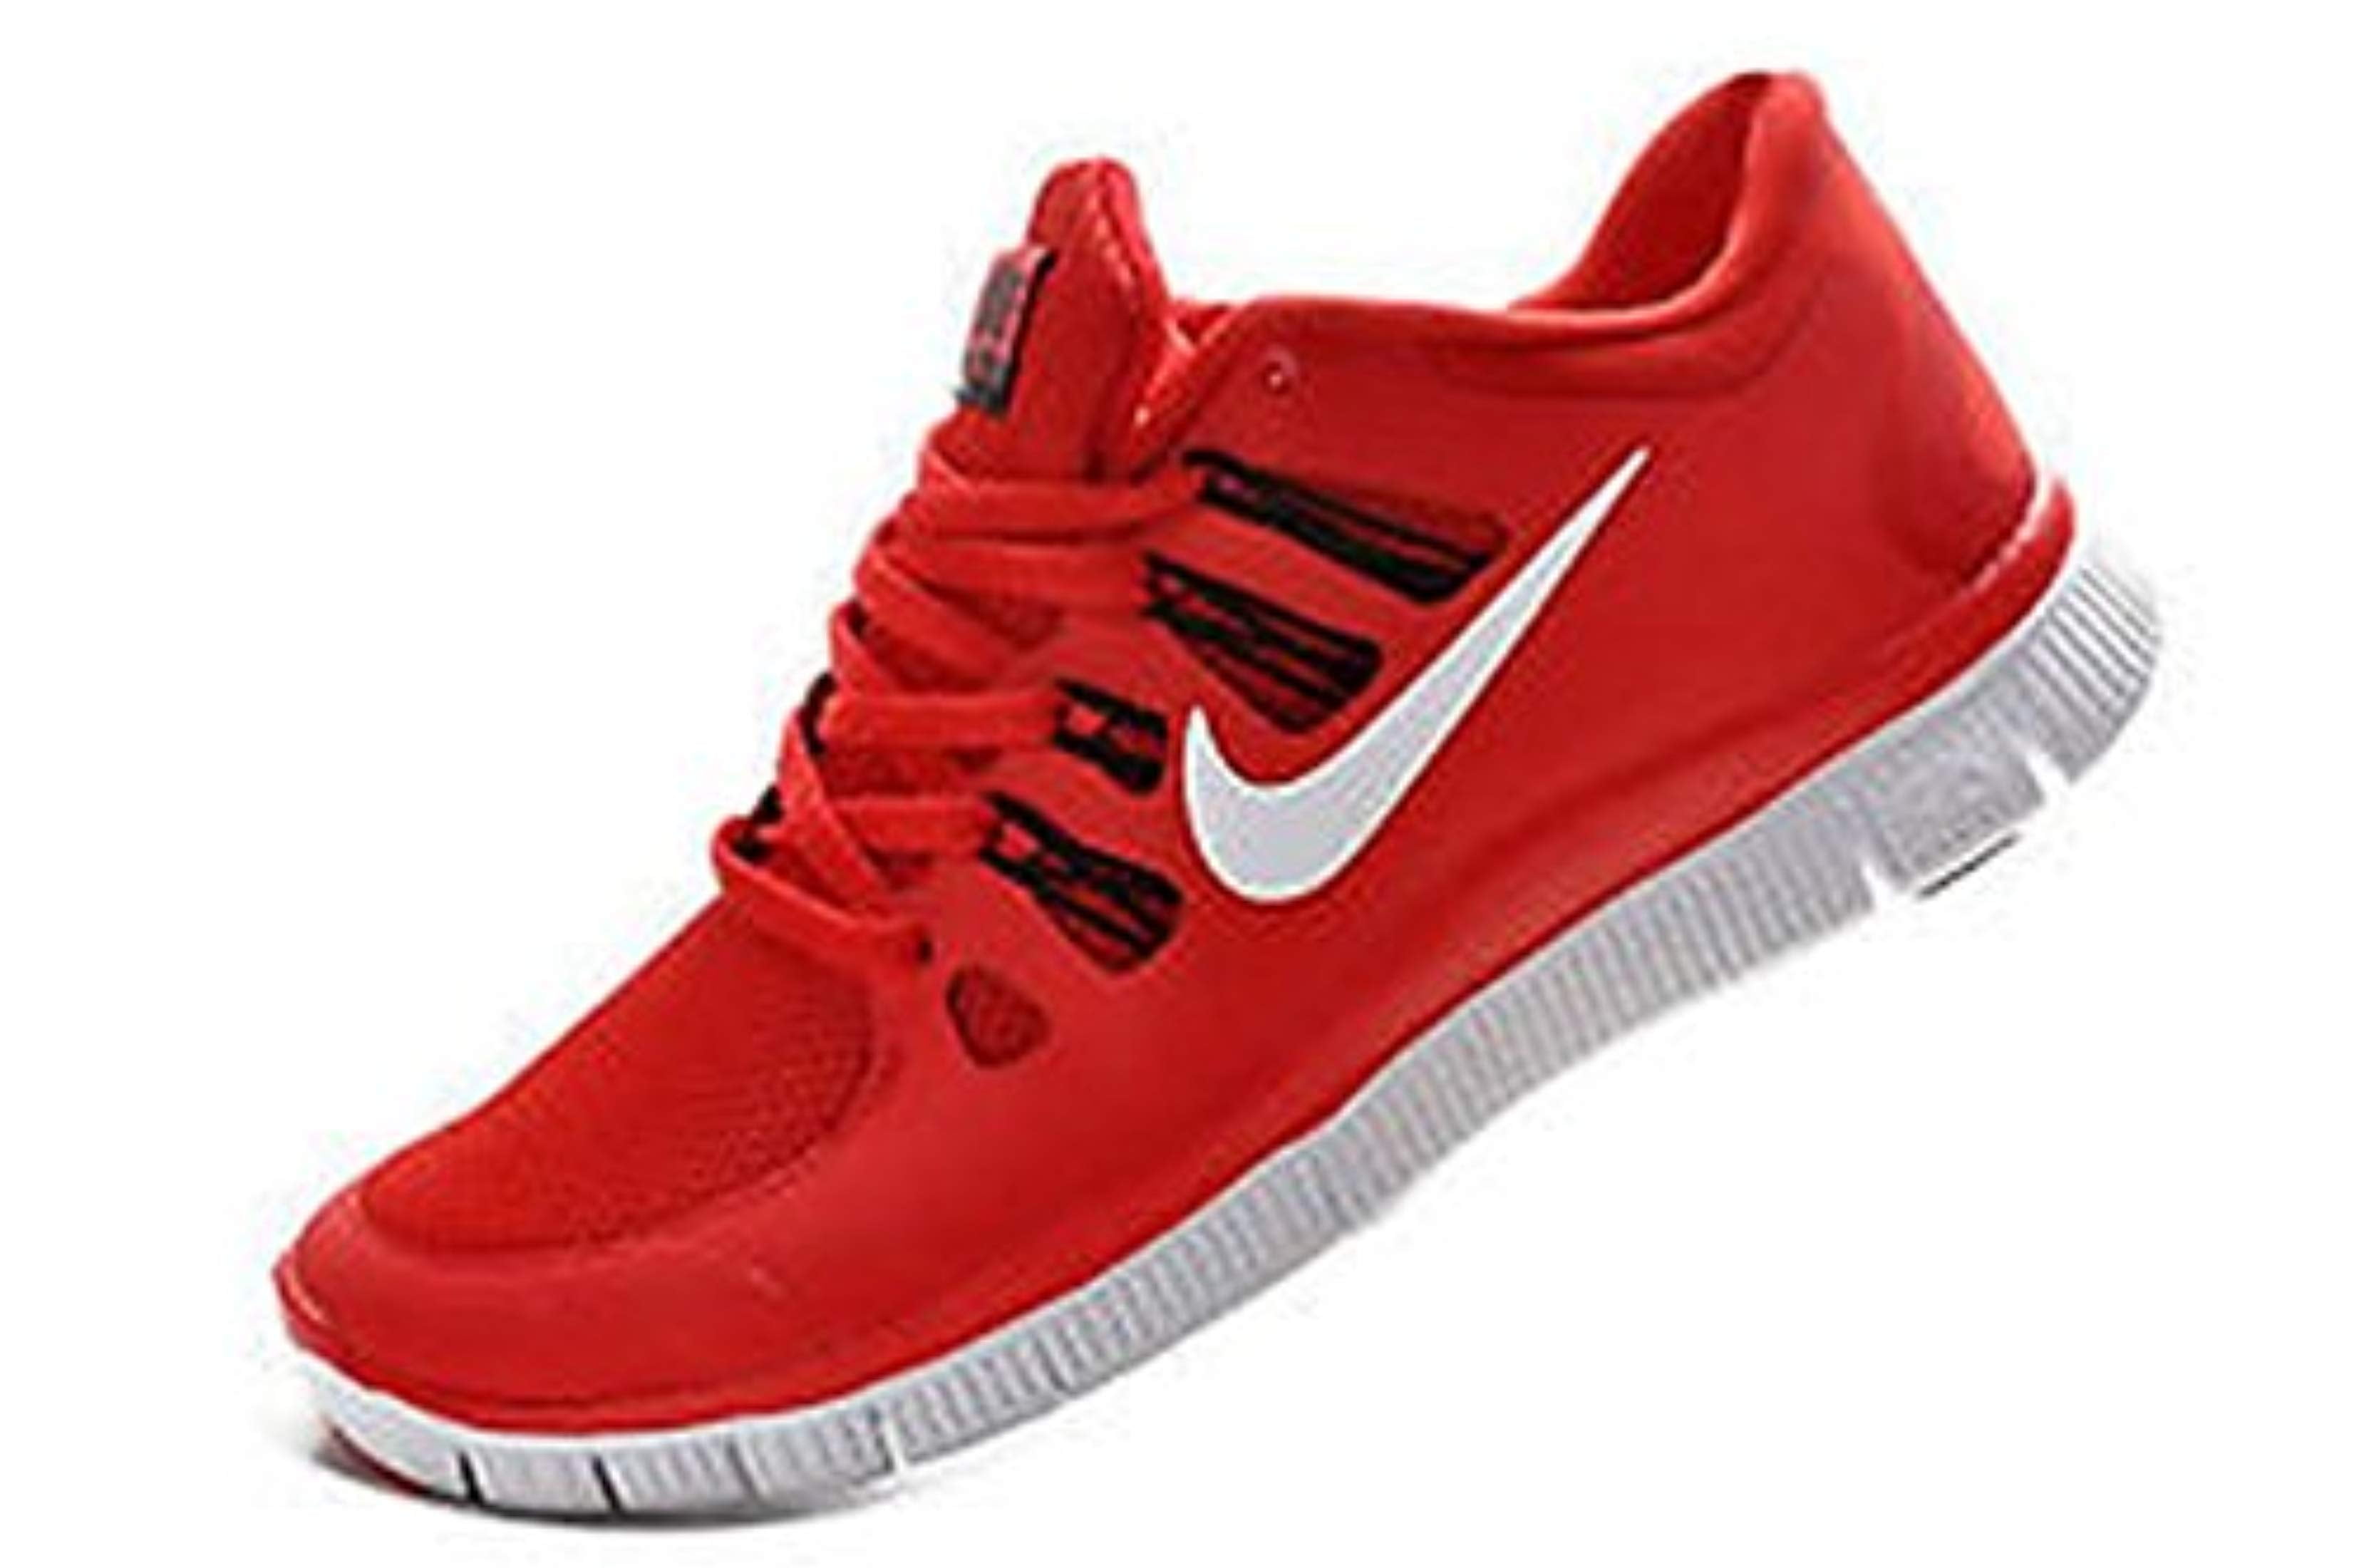 Nike Free 5.0+ Breathe Game Red/White-Black Synthetic Shoe - Walmart.com